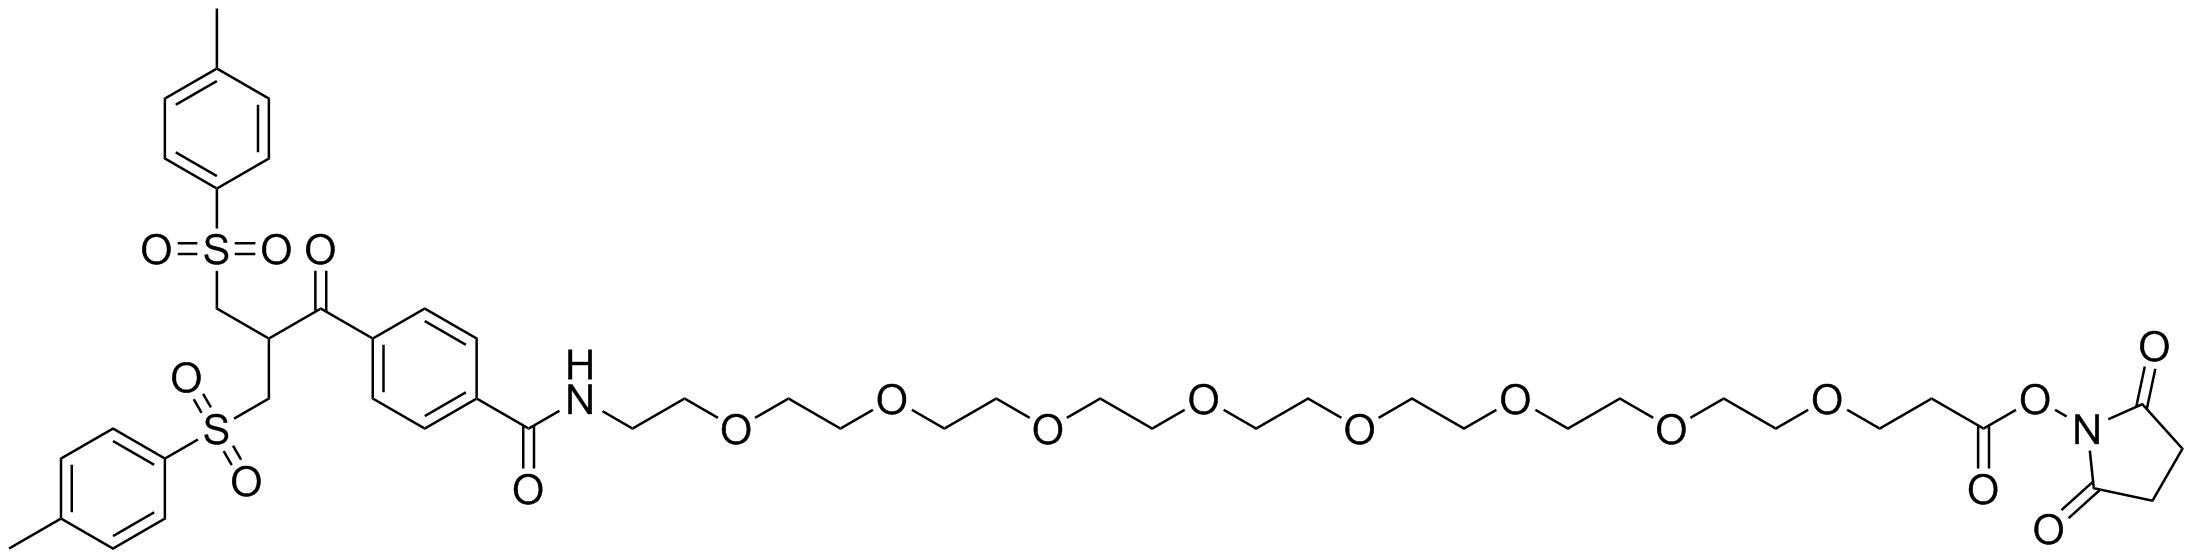 Bis-sulfone-PEG8-NHS Ester